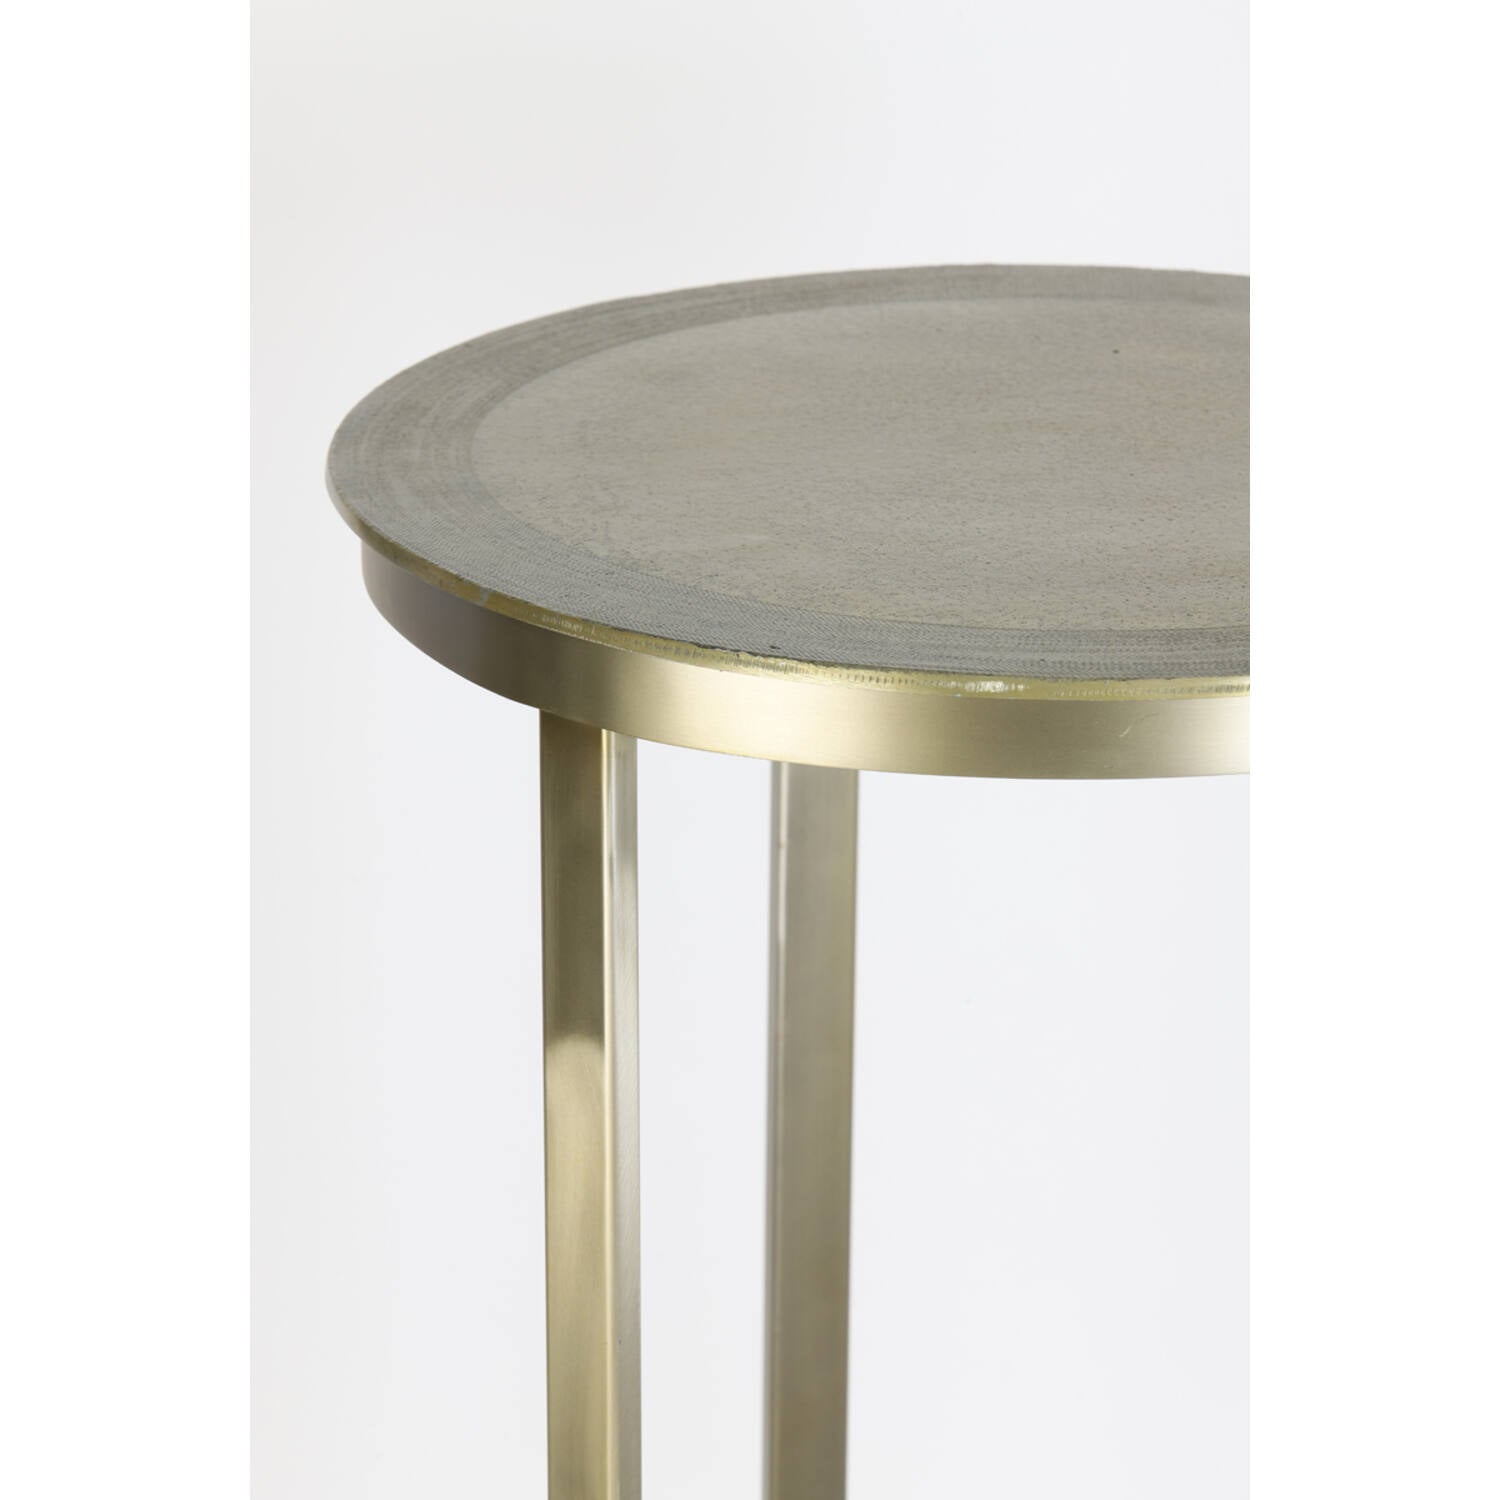 Retiro Large Pillar Side Tables - Light Gold Finish